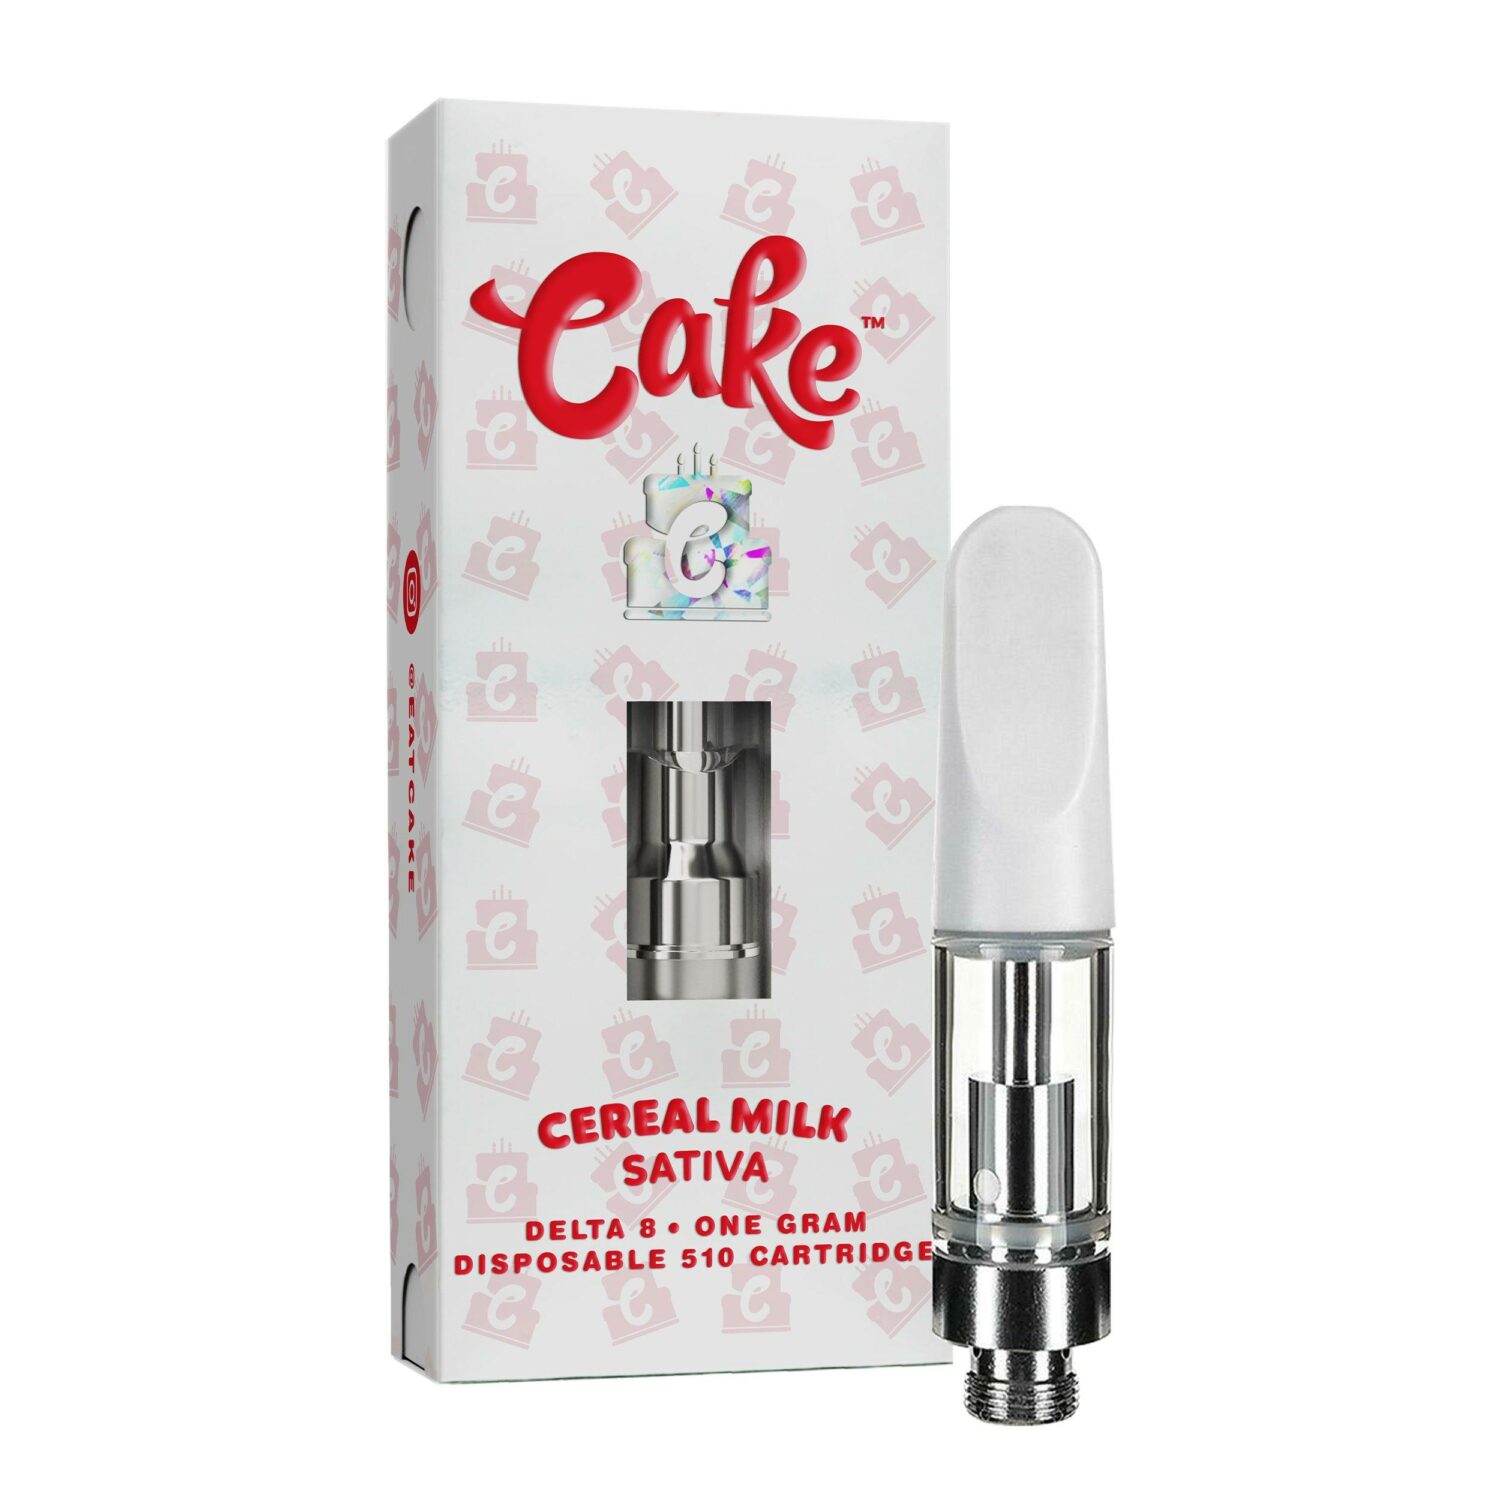 d8gas-cake-delta-8-cartridges-cereal-milk-scaled-1.jpg